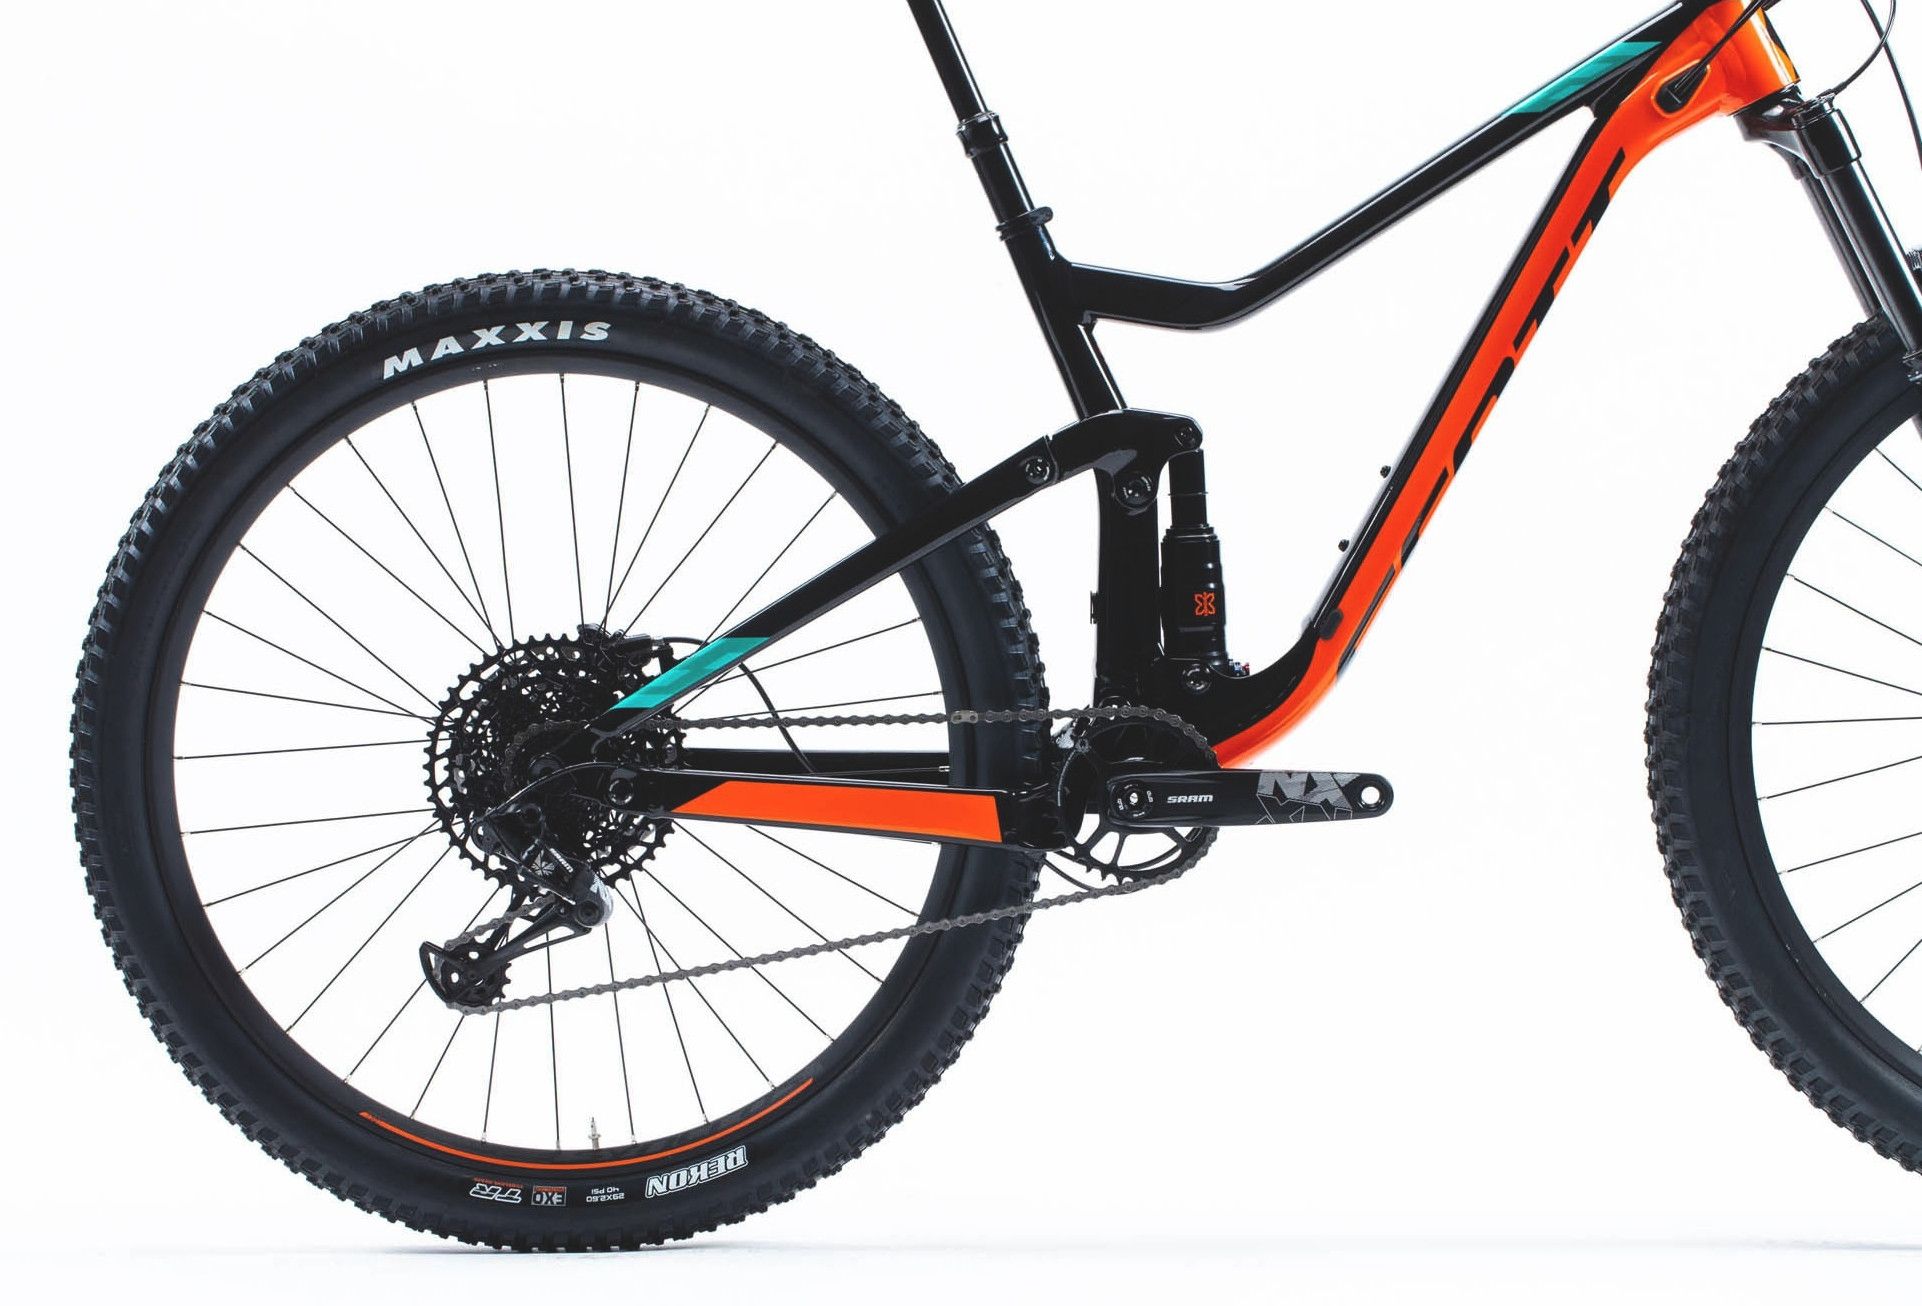 Scott Genius 960 29 schwarz-orange (2019) - Fahrrad Online Shop